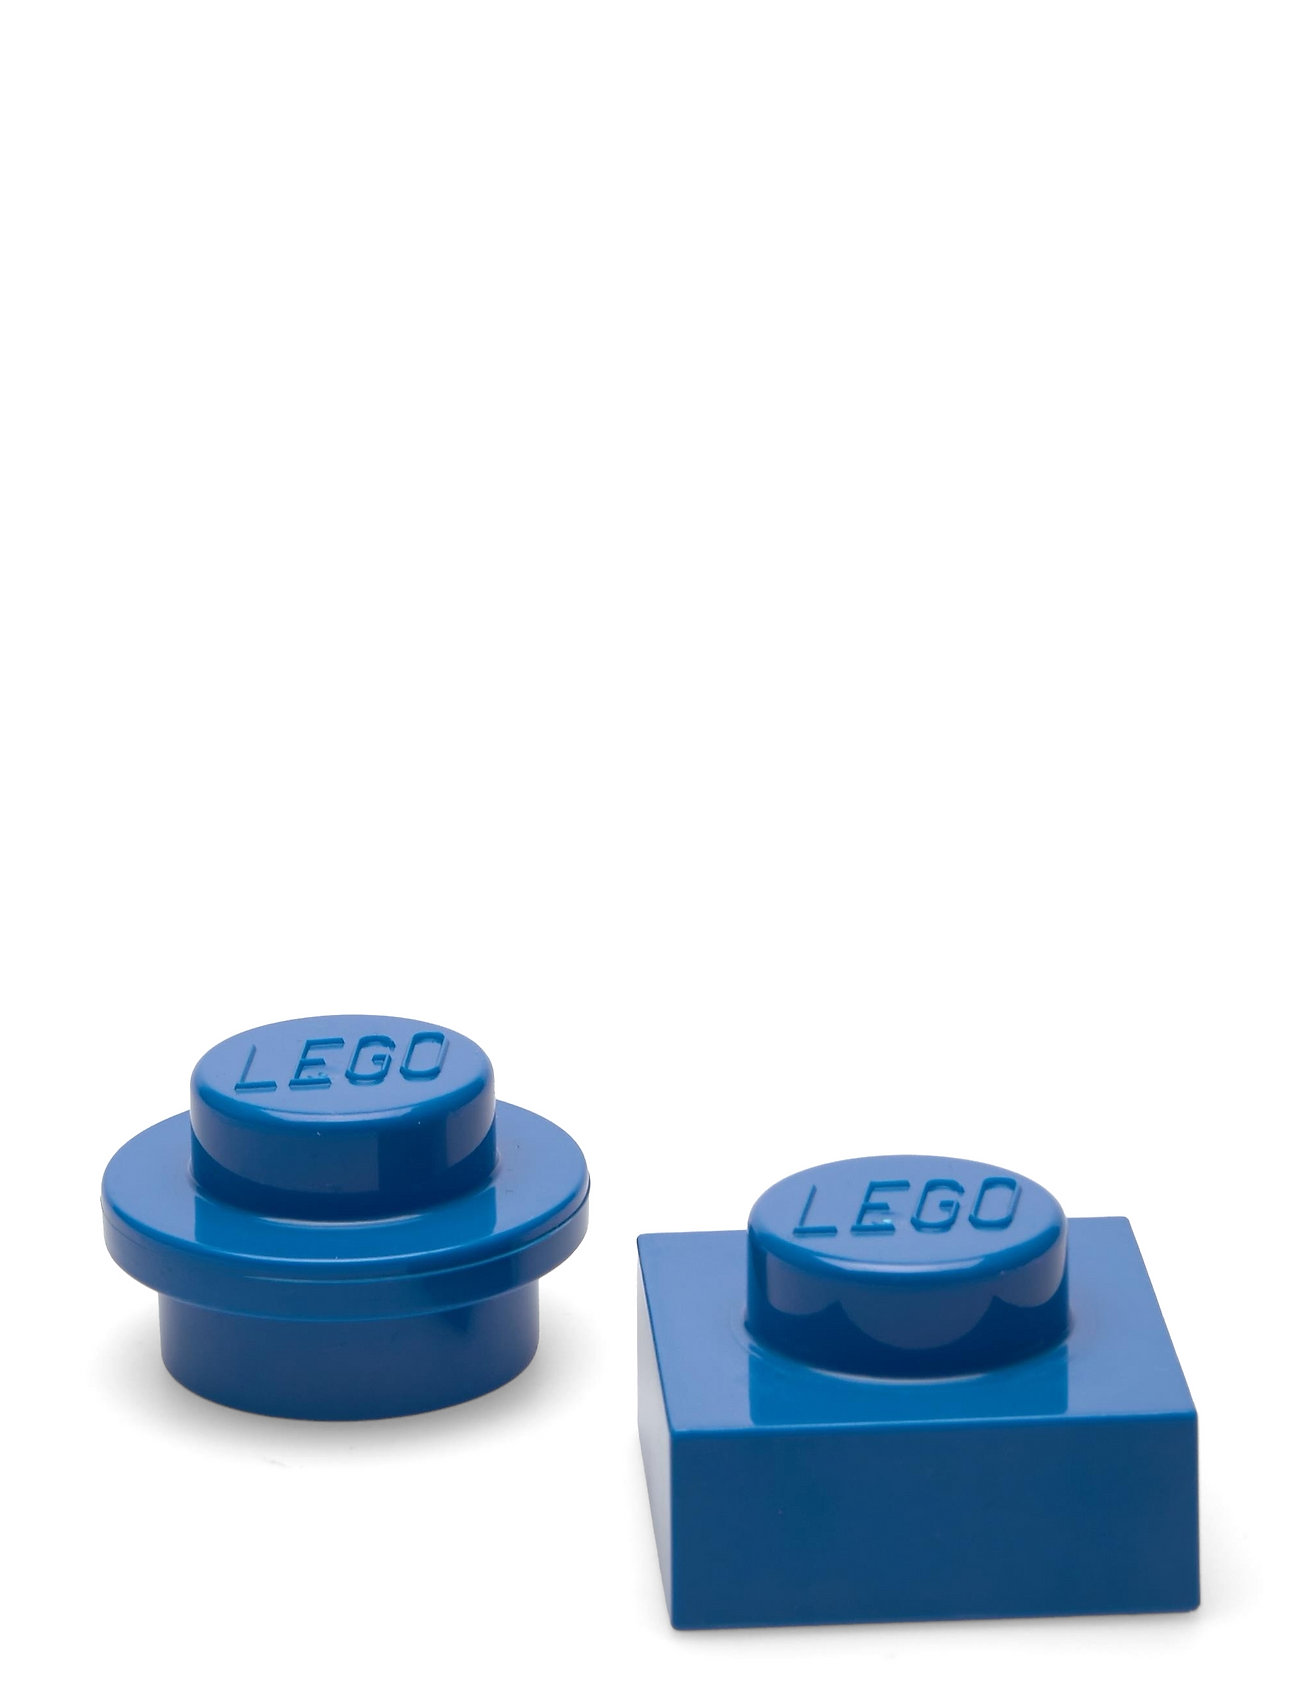 Lego Magnet Set Round And Square Home Kids Decor Decoration Accessories-details Blue LEGO STORAGE